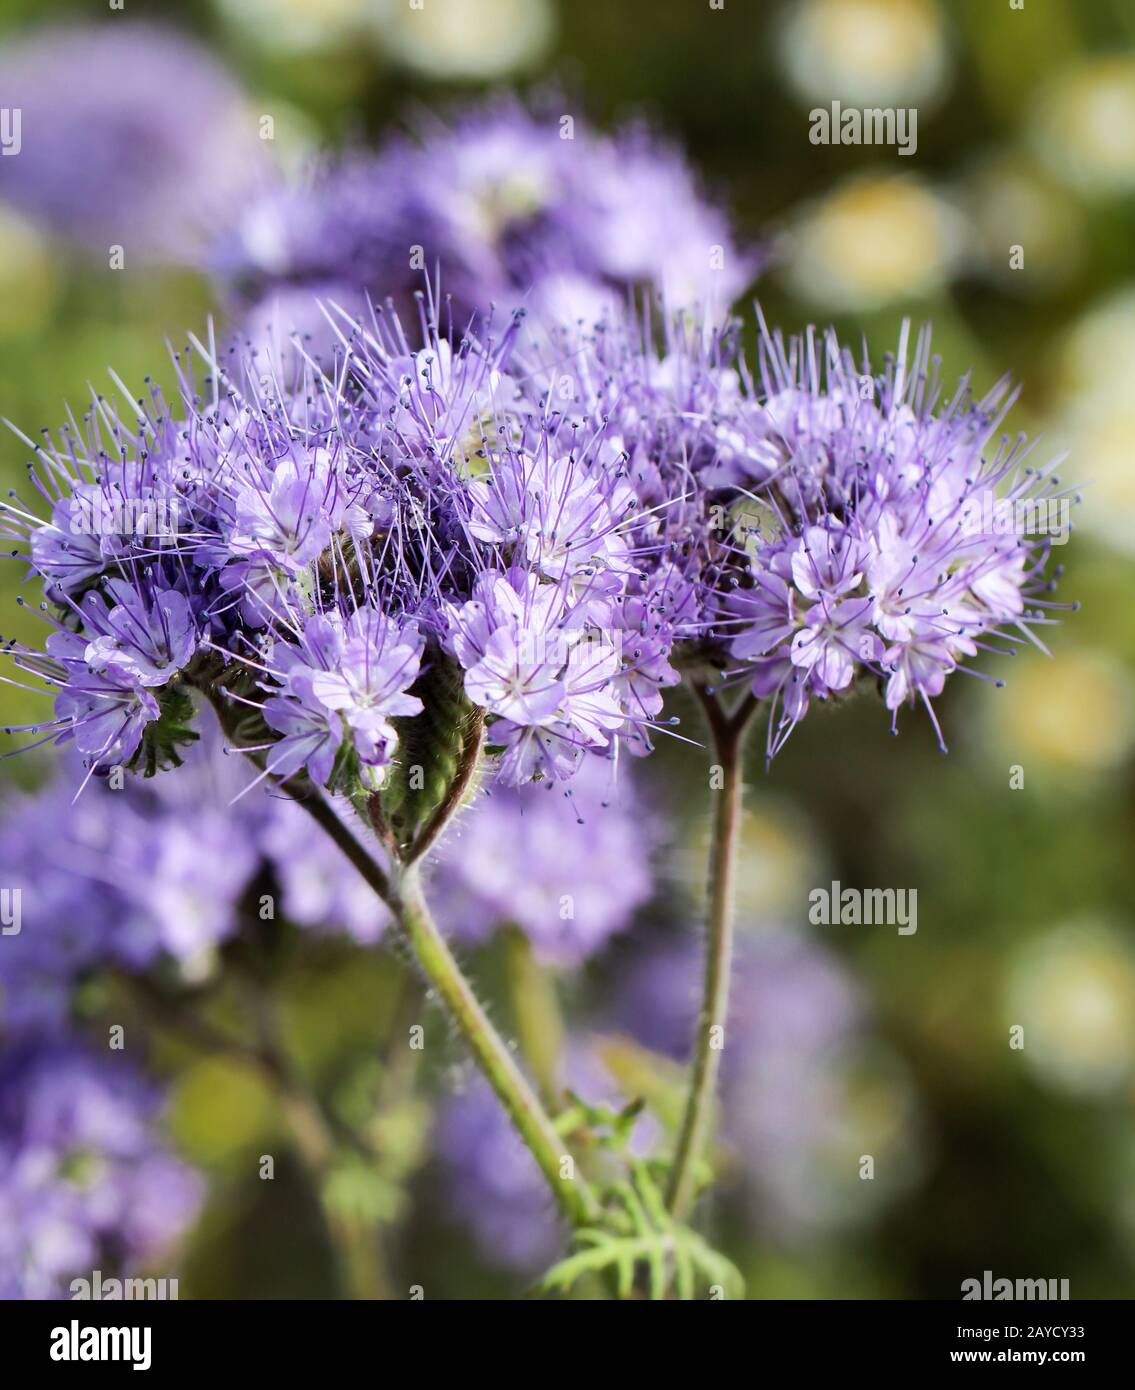 Blue-violet flowers Phacelia on a field Stock Photo